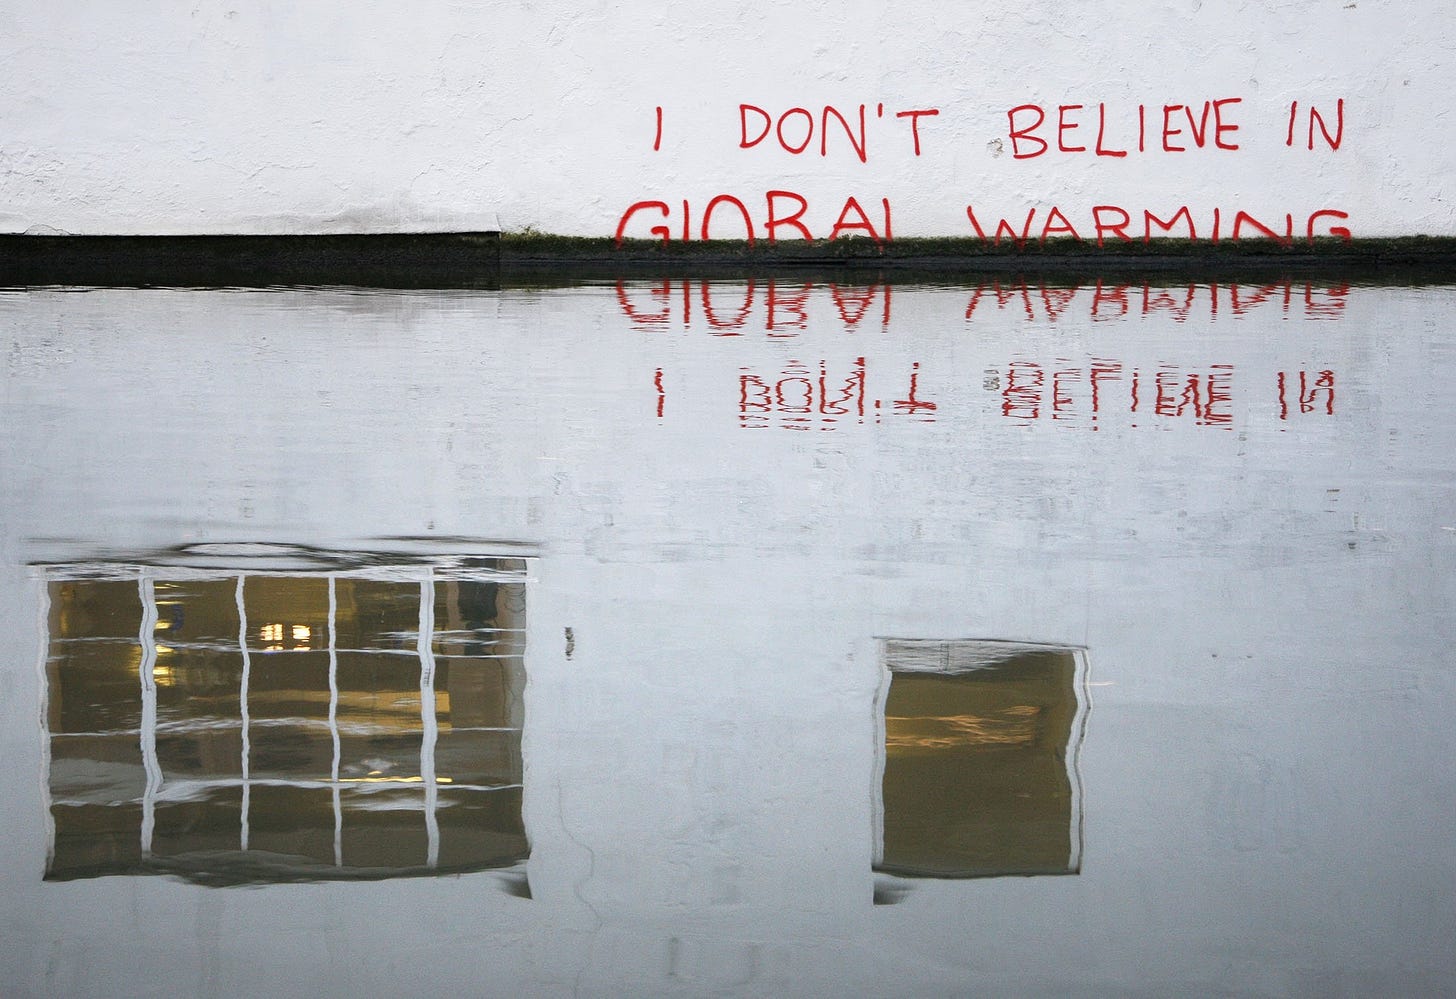 “ I Don’t Believe in Global Warming” Regents Canal in Camden, London. December 2009